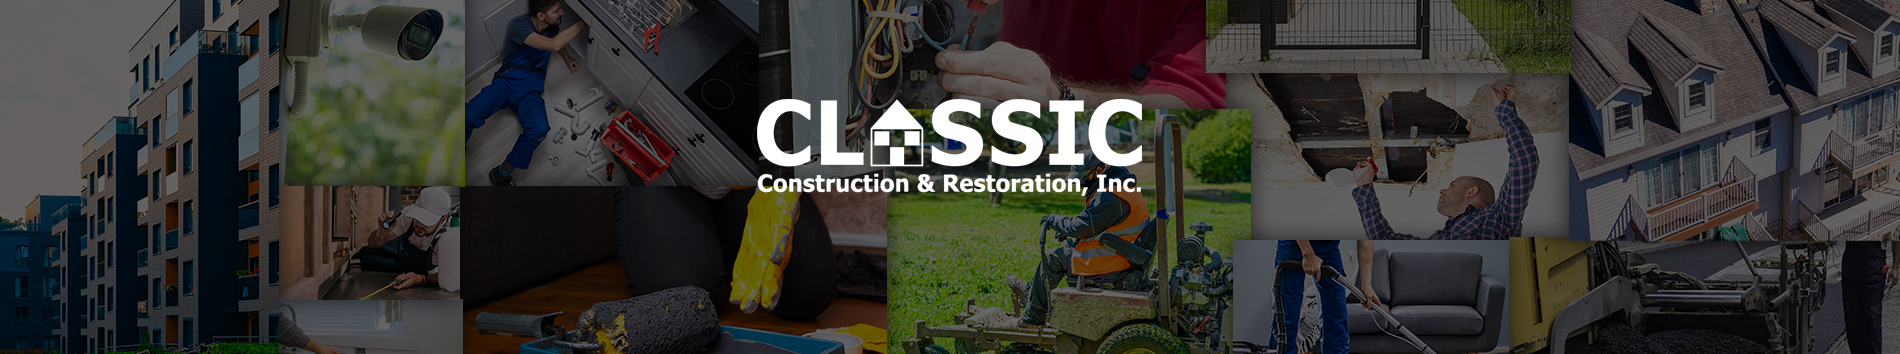 Classic Construction & Restoration, Inc.